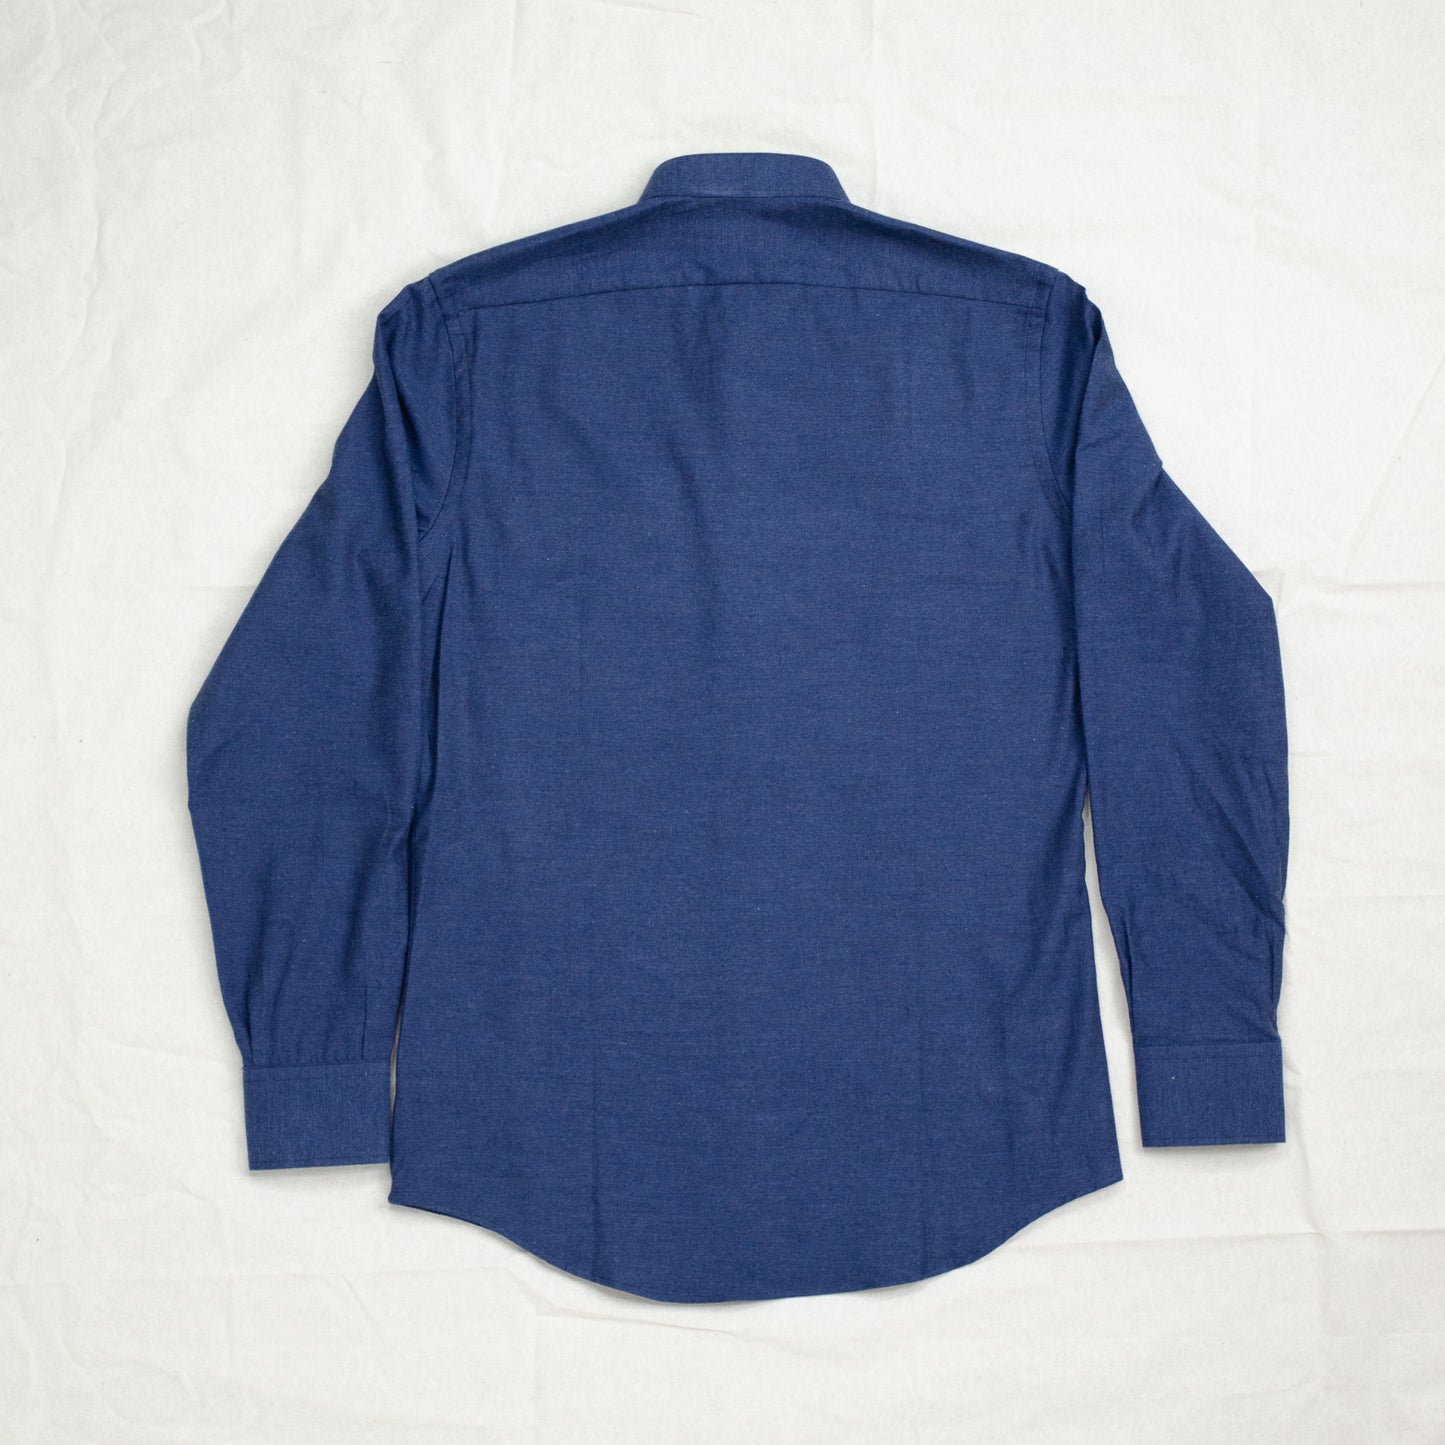 Brushed Cotton Shirt - Navy